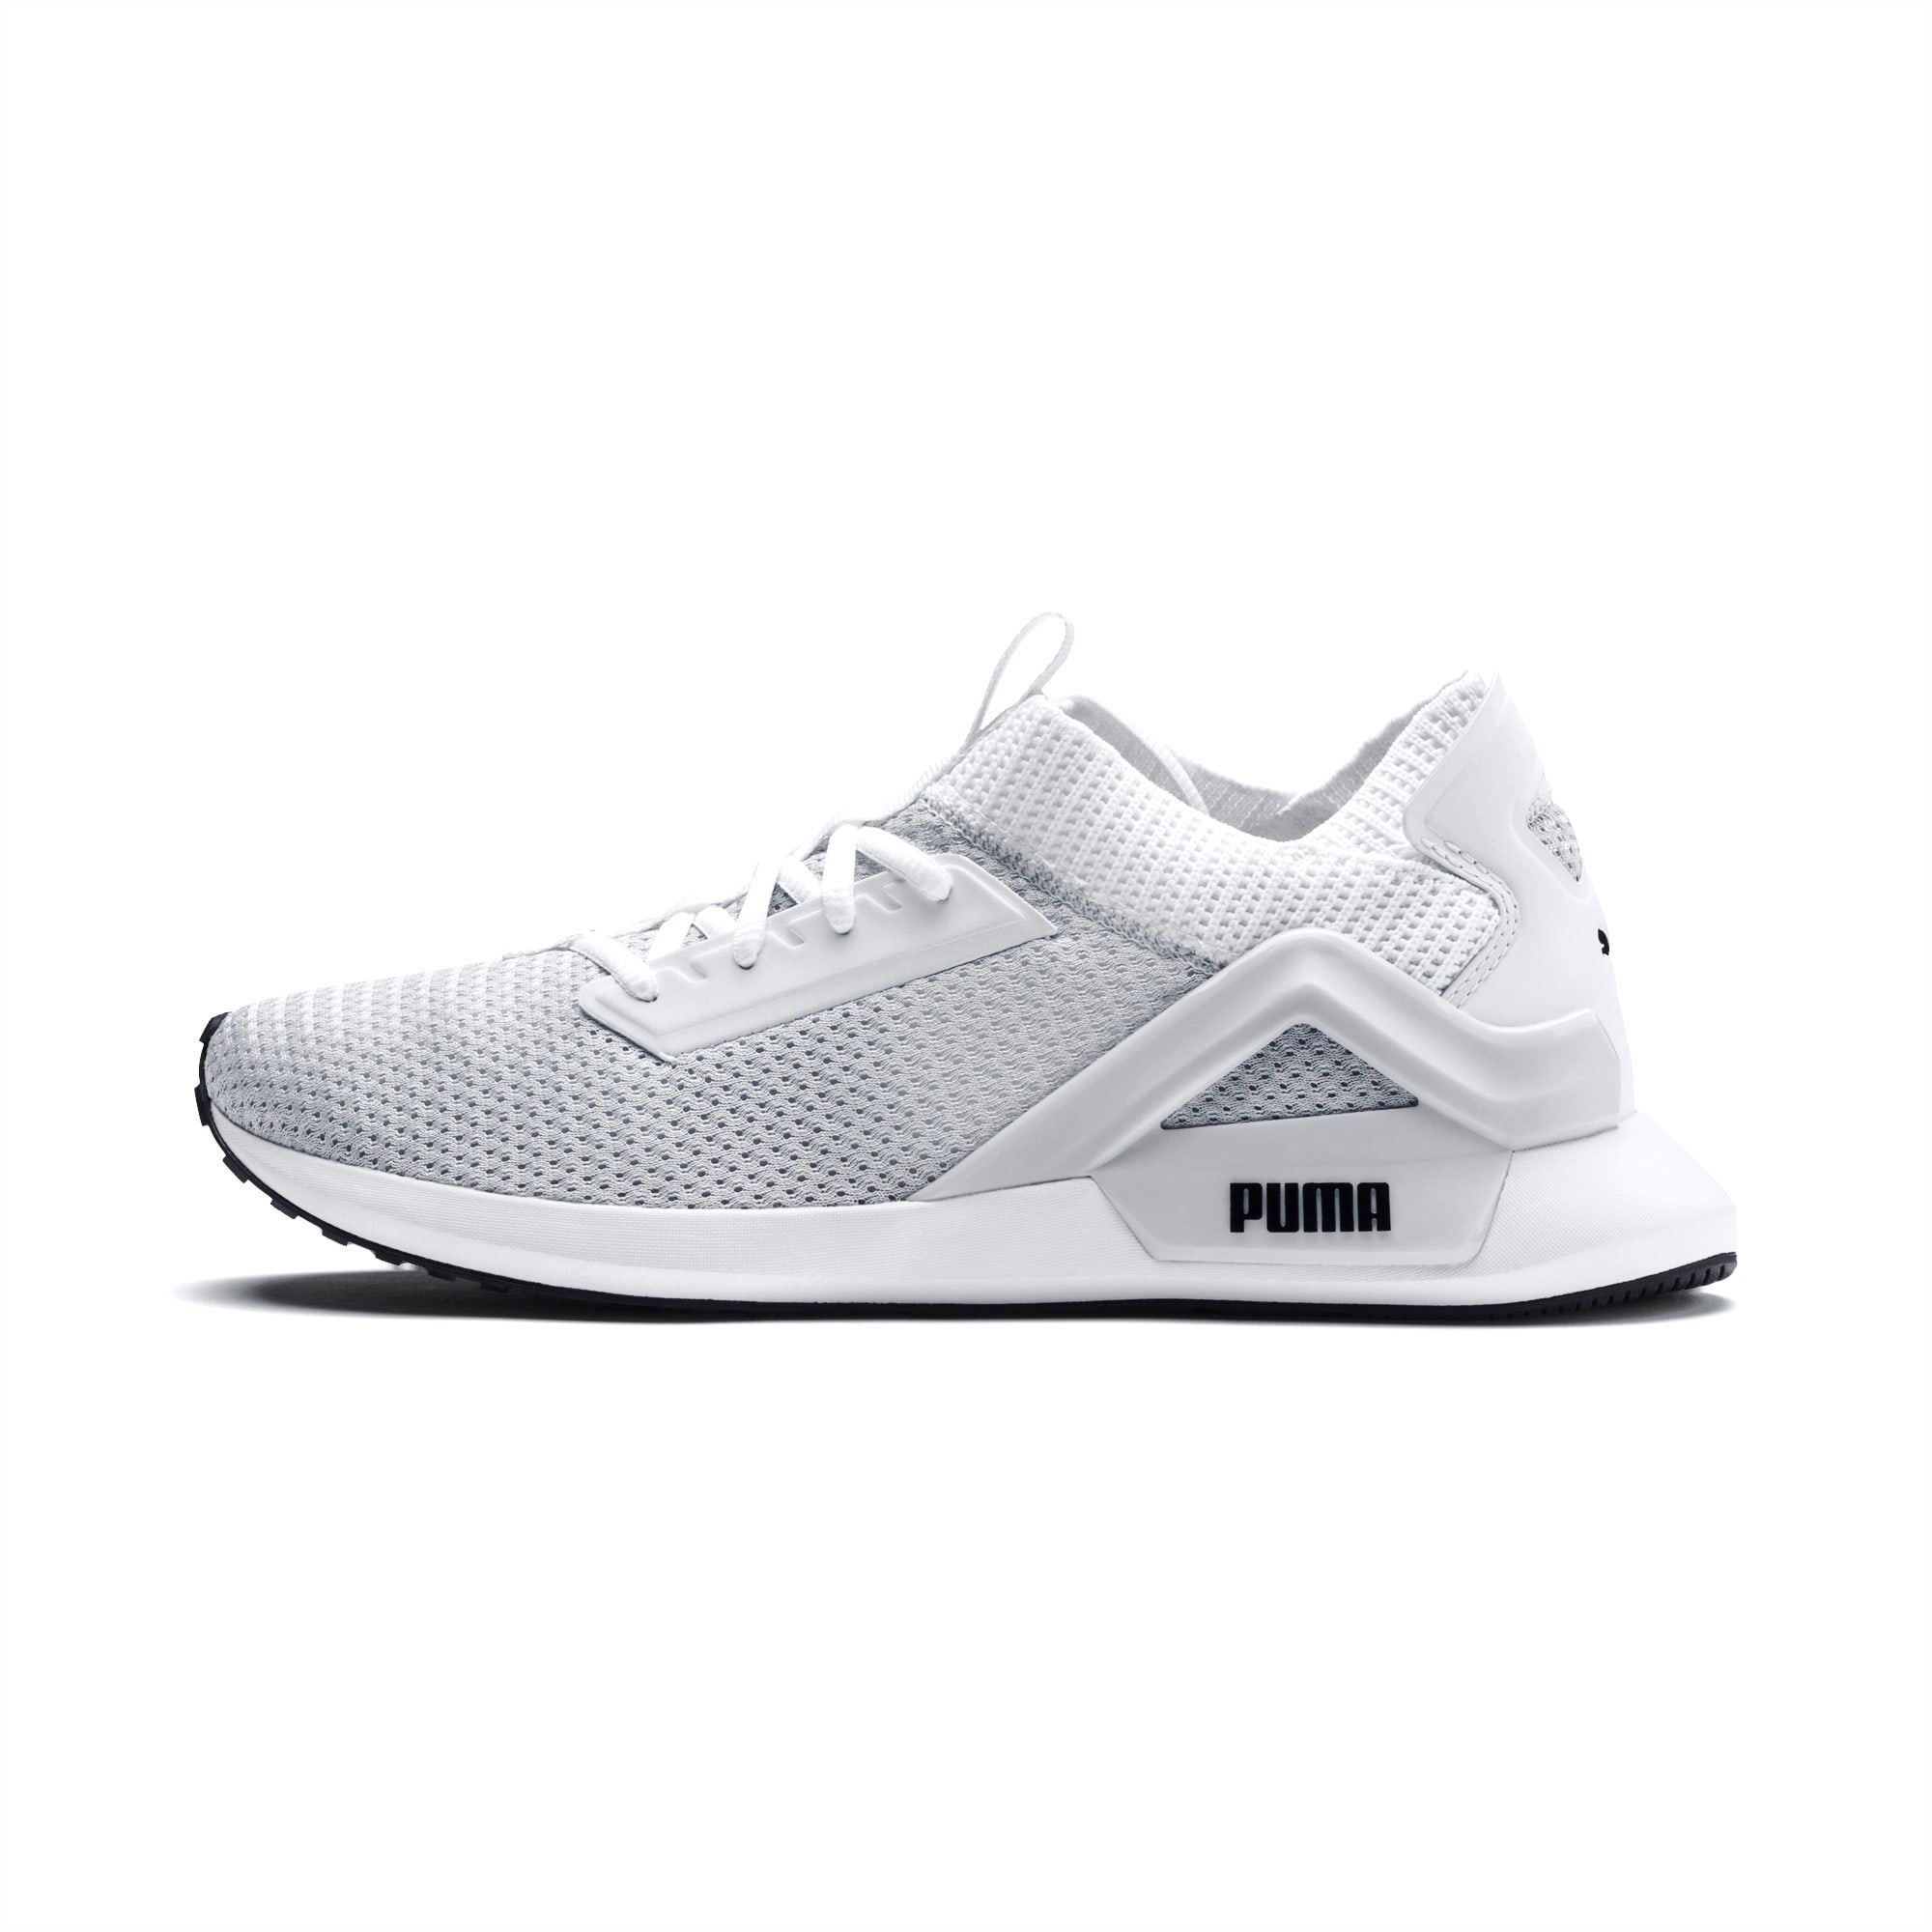 puma rogue running shoes